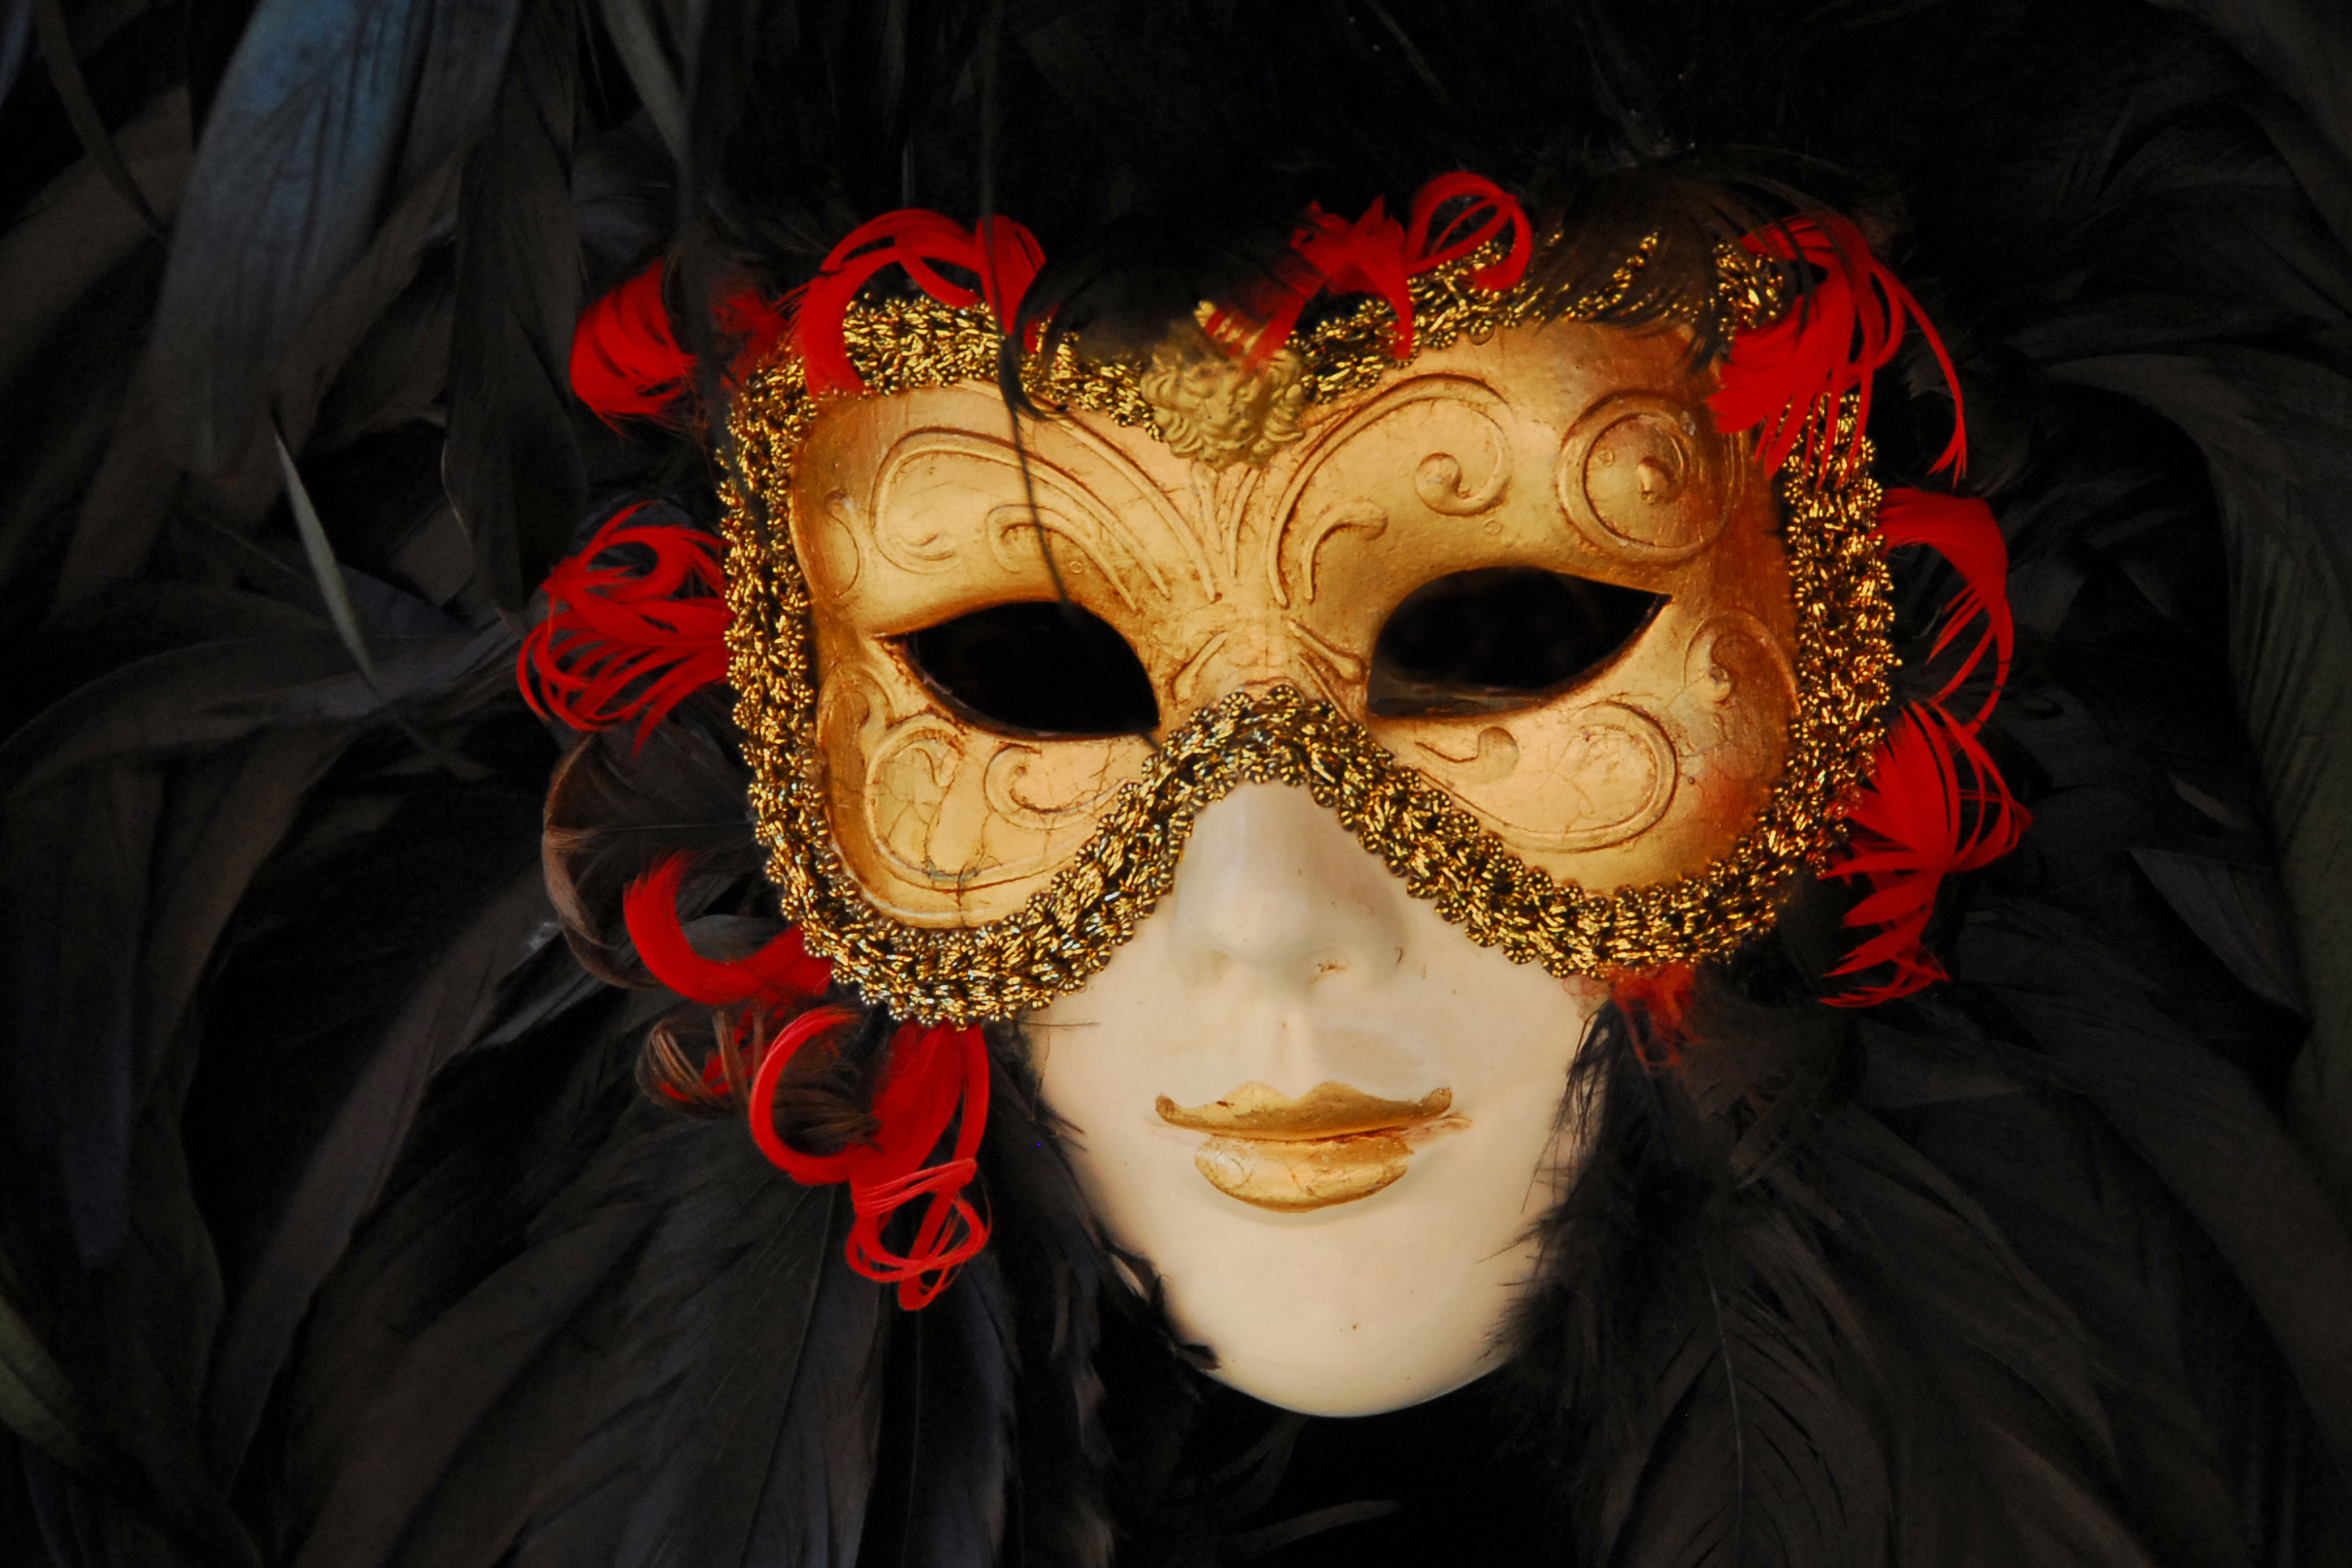 Masquerade speed up. Венецианский карнавал Коломбина. Венецианская маска Маттачино. Карнавальная маска Венеция 18-19вв. Маска Венеция для карнавала.